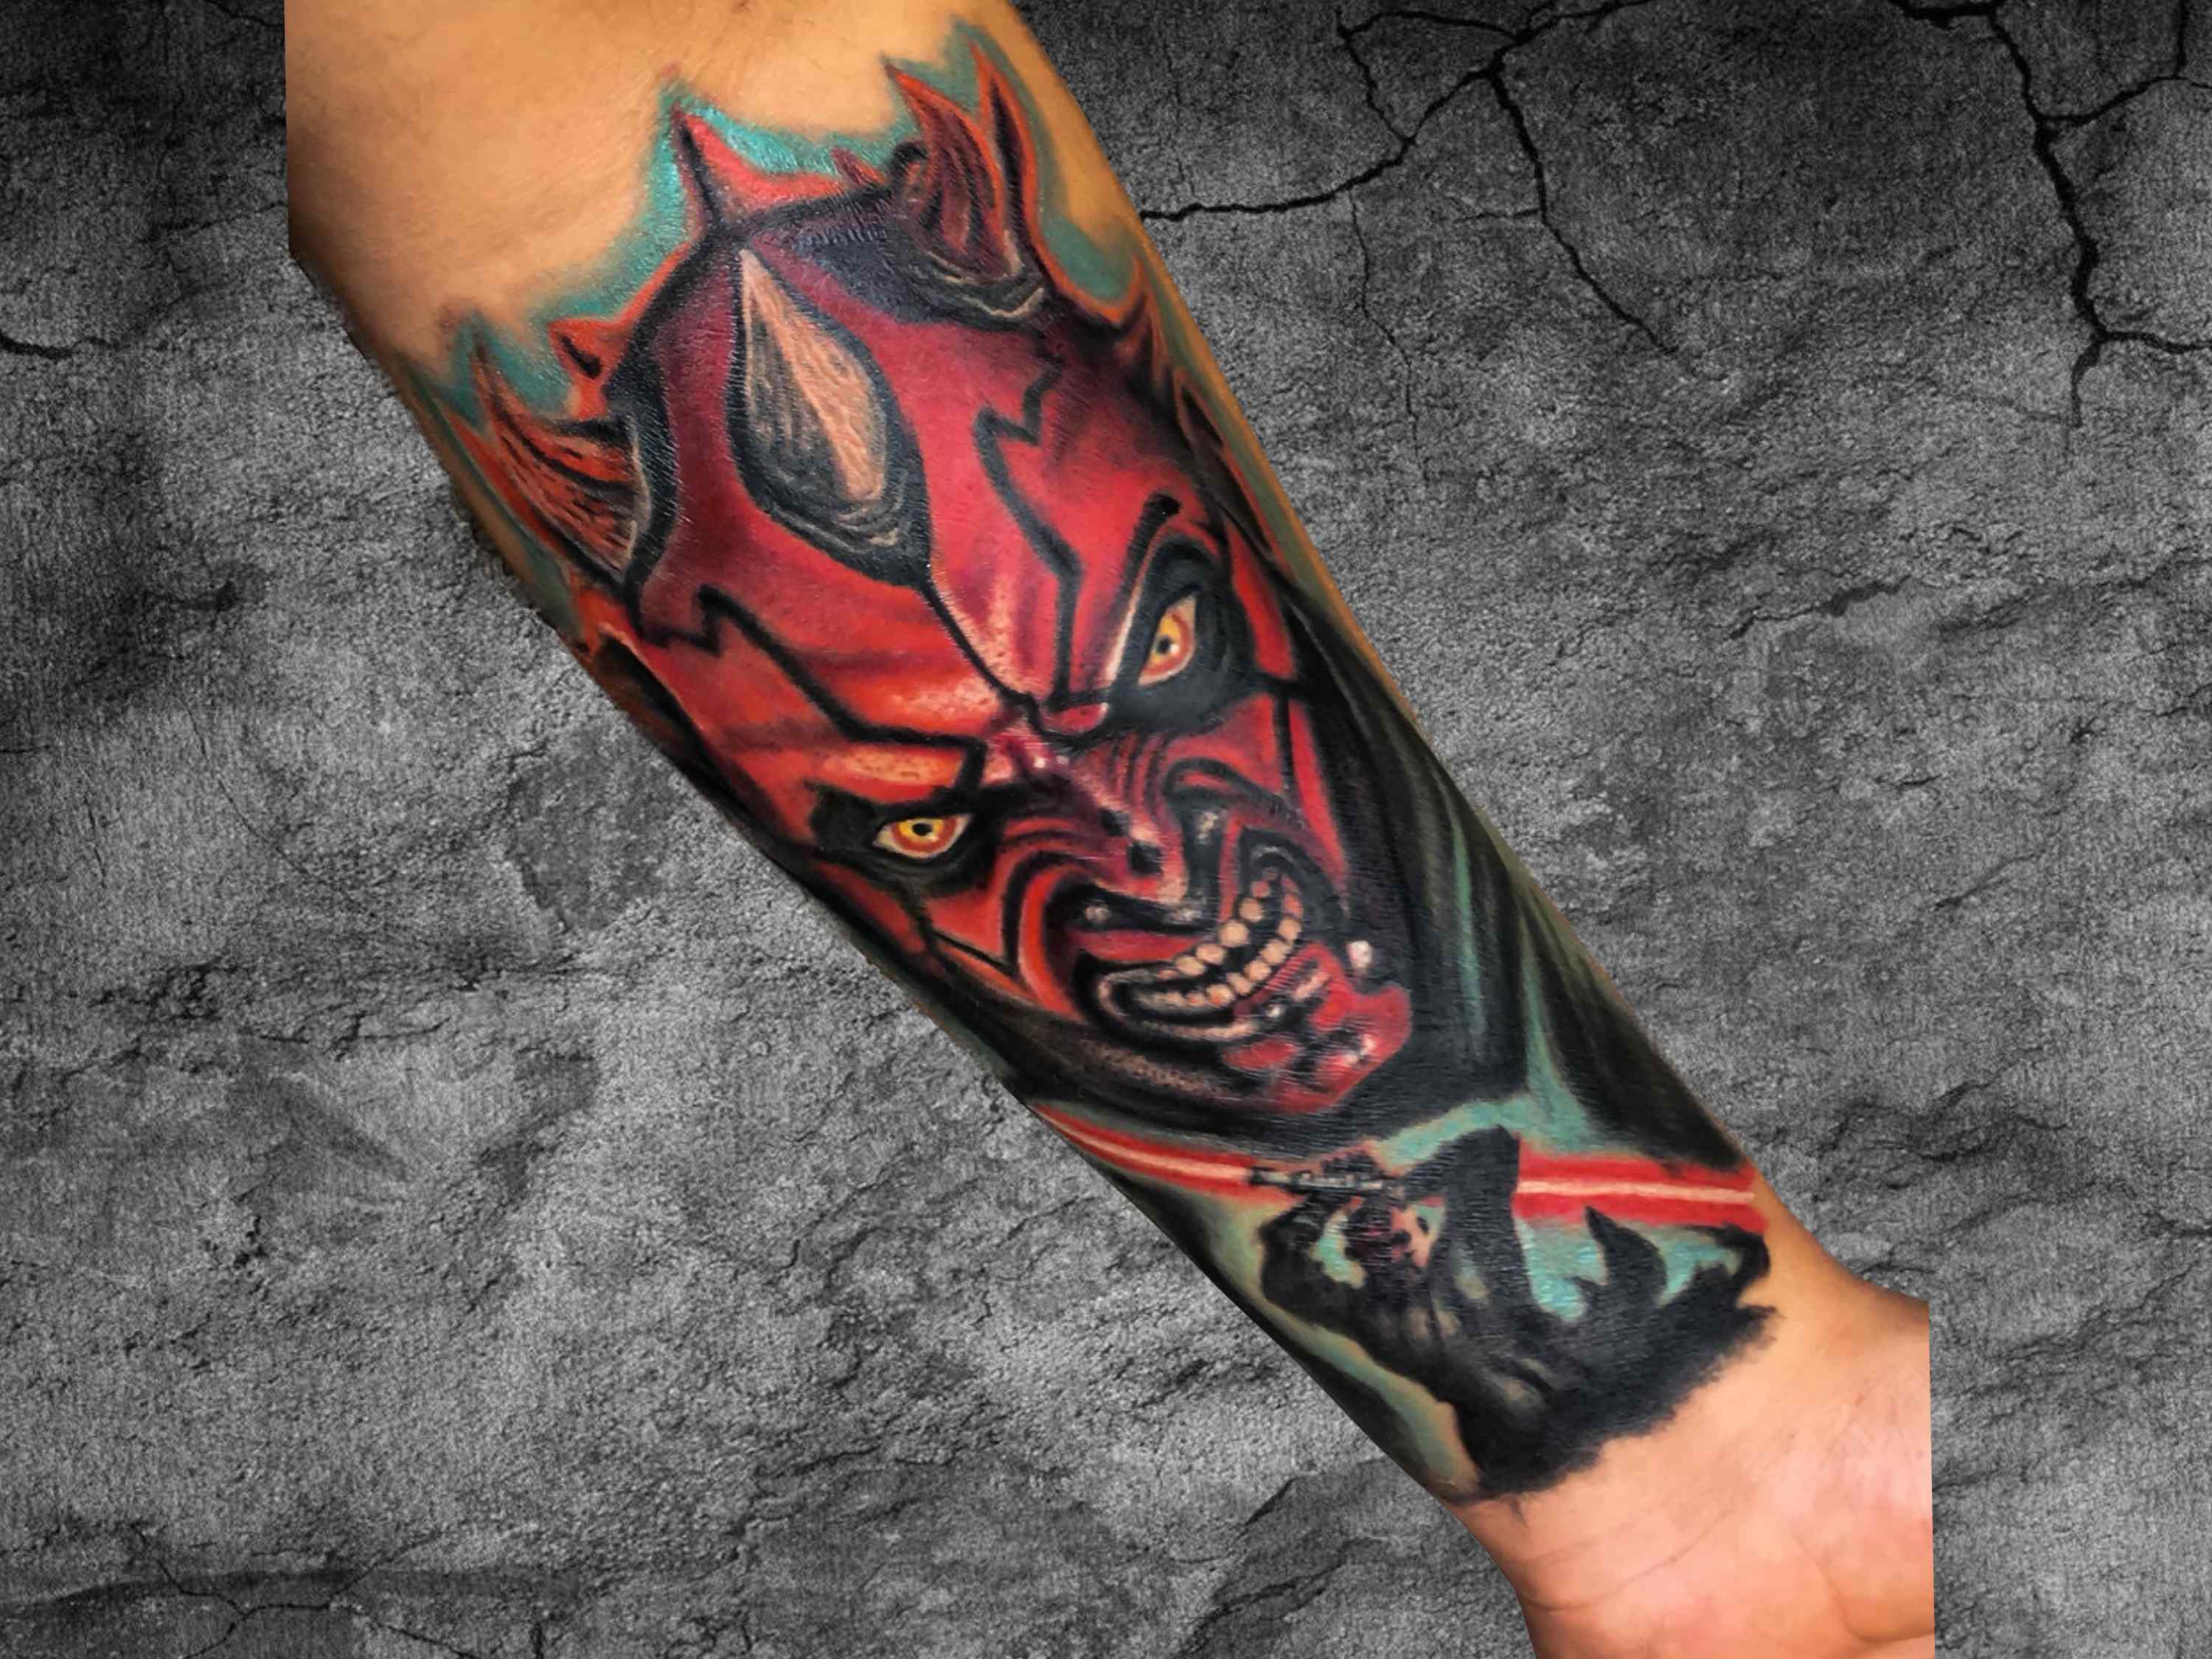 Tattoo uploaded by Domy Fätzer  Obi Wan Kenobis lightsaber Big thanks to  Casparwolfftattoo  Tattoodo